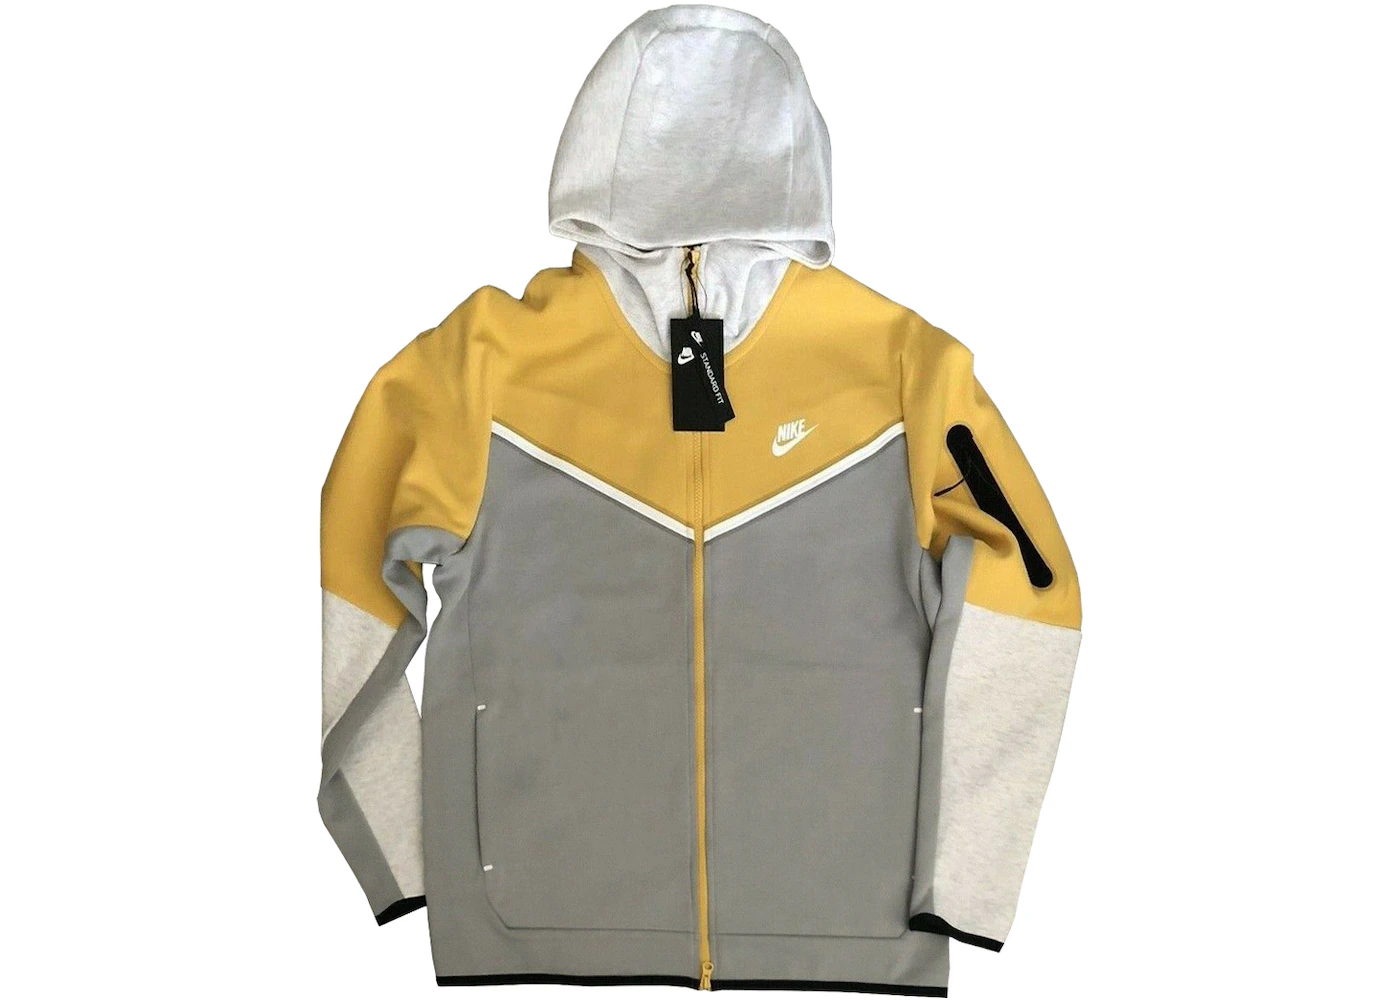 https://images.stockx.com/images/nike-tech-fleece-full-zip-hoodie-mustard-grey-black.jpg?fit=fill&bg=FFFFFF&w=700&h=500&fm=webp&auto=compress&q=90&dpr=2&trim=color&updated_at=1650903041